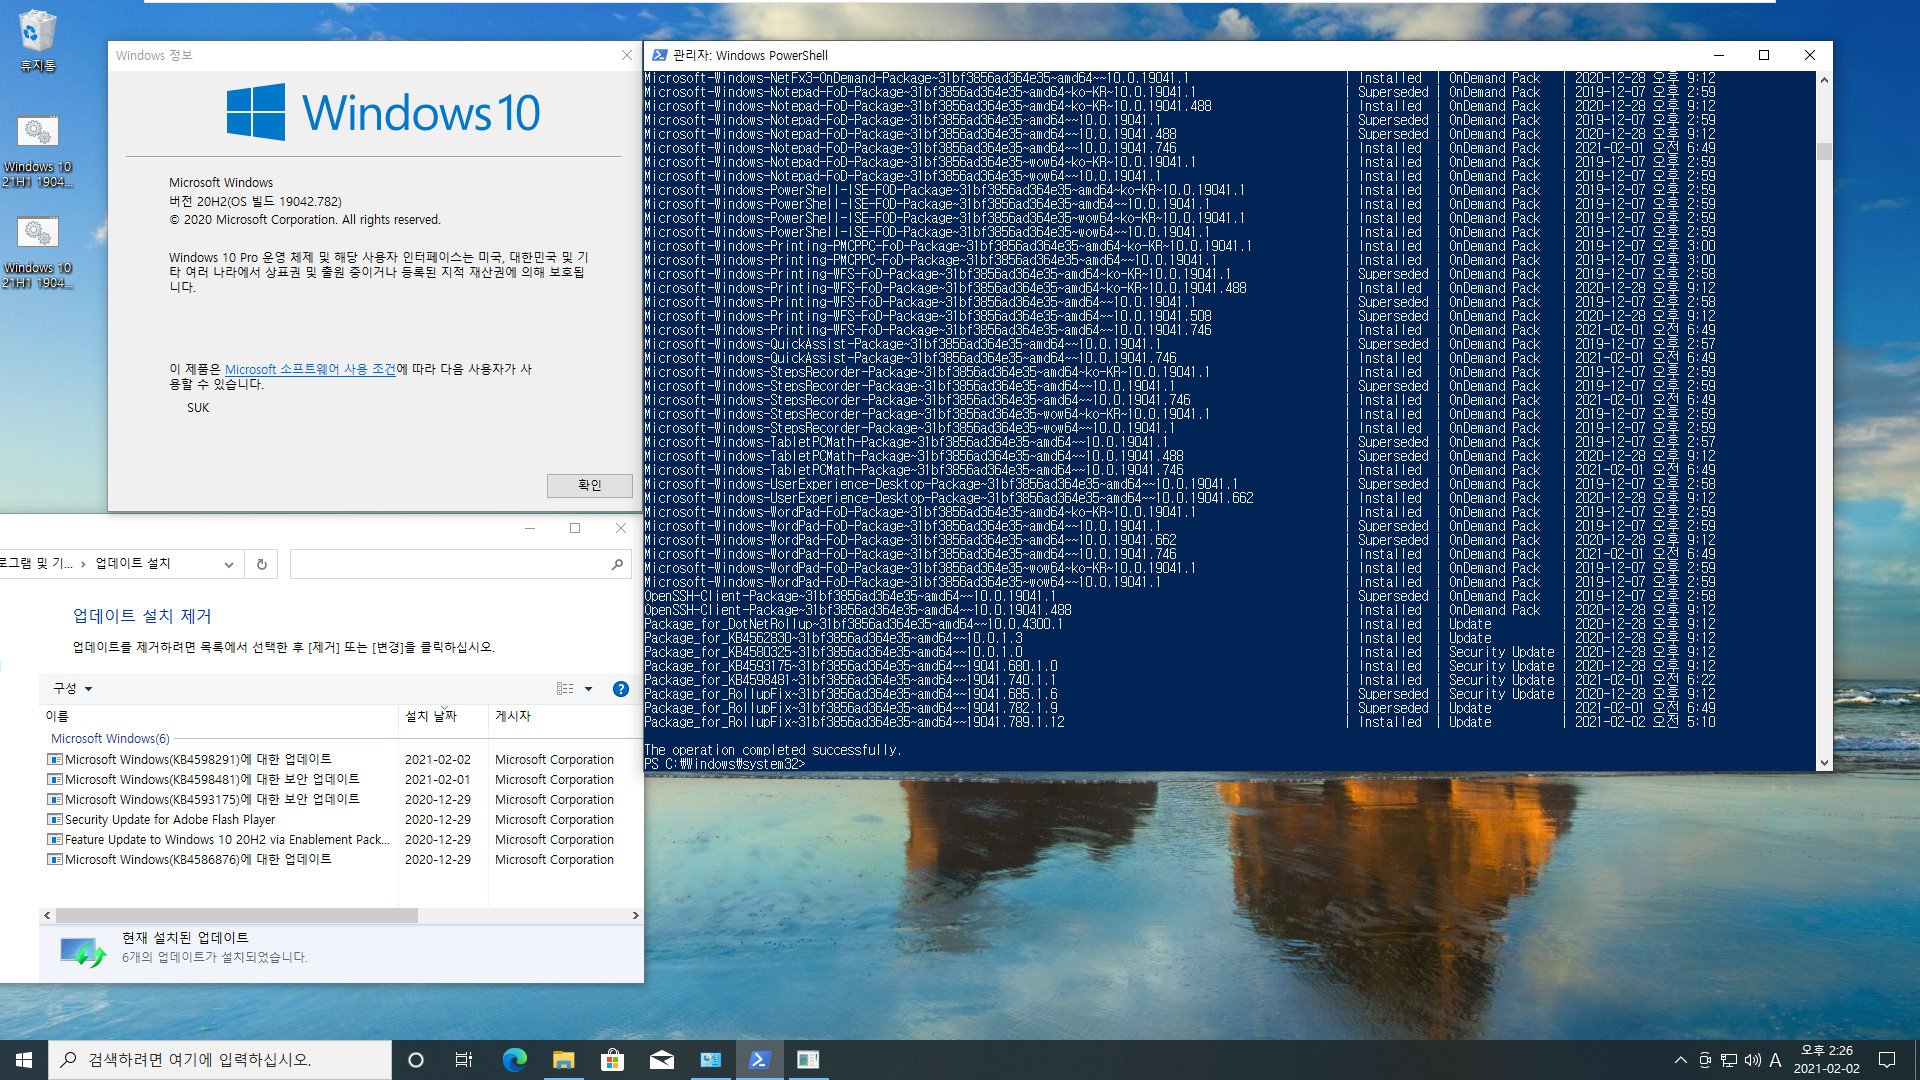 Windows 10 21H1 19043 빌드로 업그레이드하기2.bat 테스트 - 21H1 업그레이드 후에 새 누적 업데이트 설치하려면, 21H1 제거한 후에 새 누적 업데이트 설치해야 하네요 2021-02-02_142635.jpg